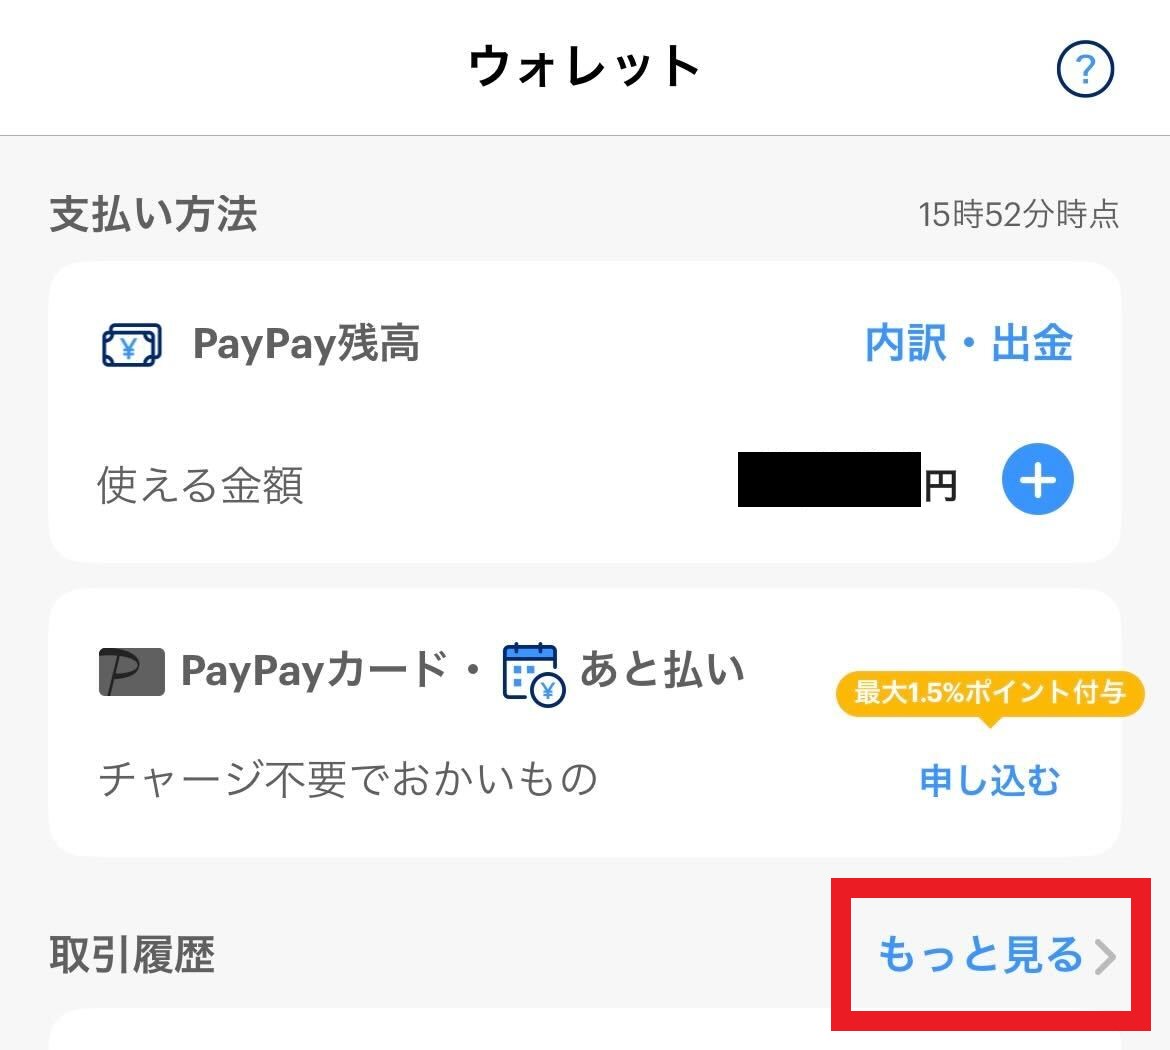 PayPay2.jpg